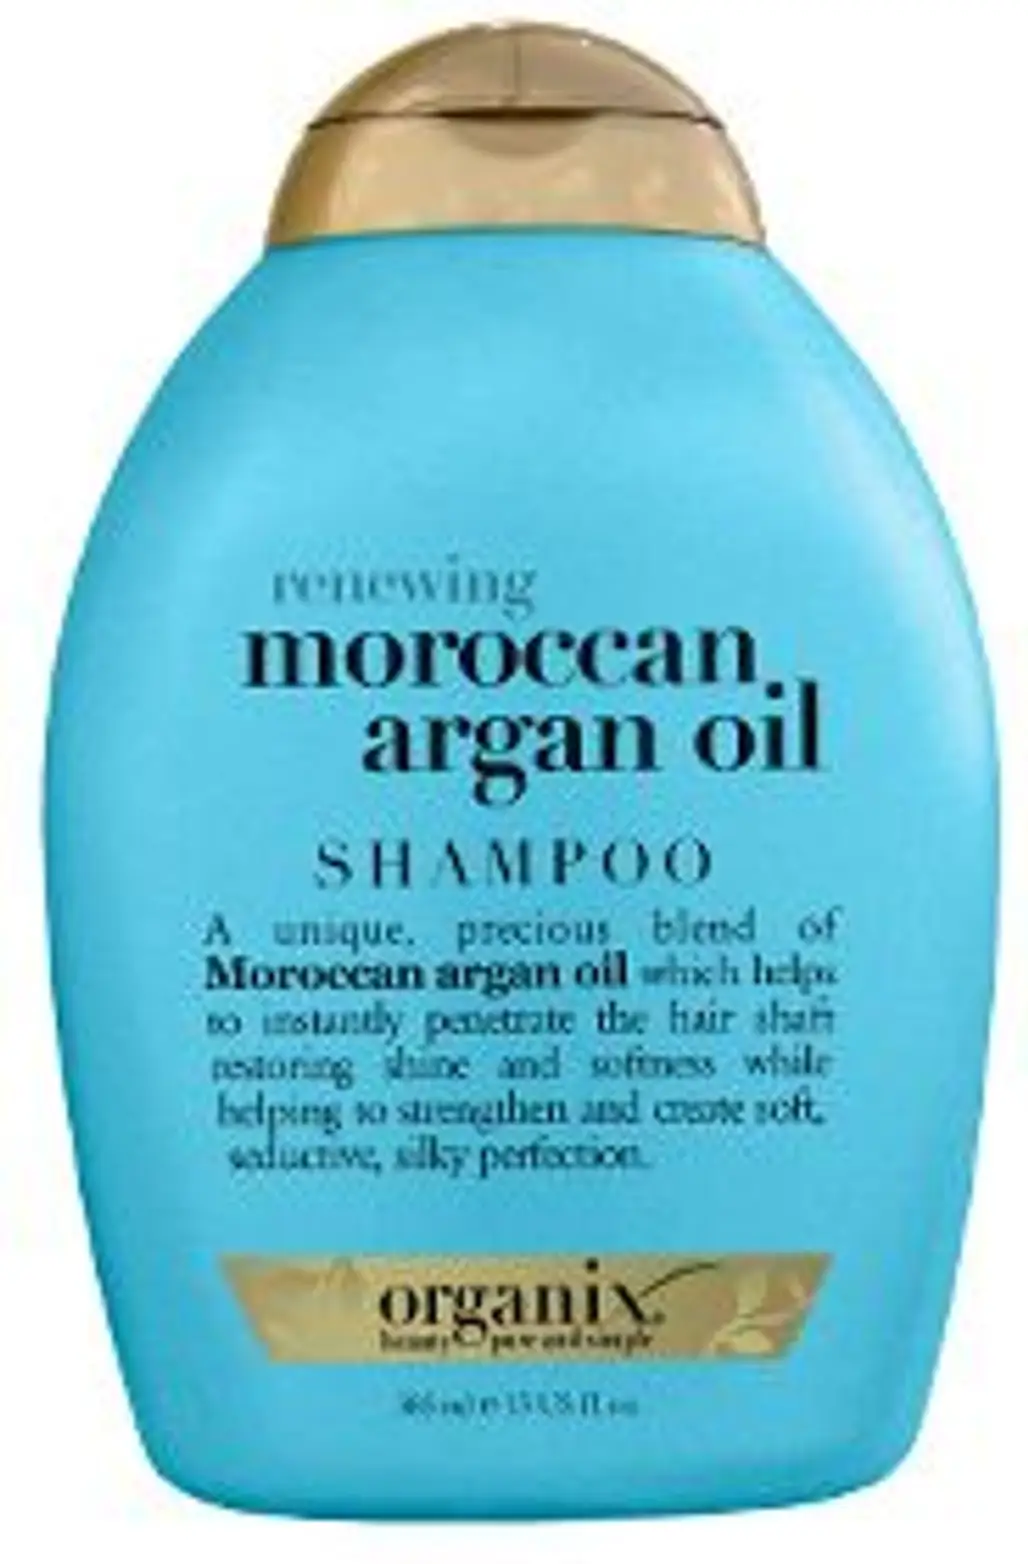 Organix Argan Oil Shampoo and Conditioner